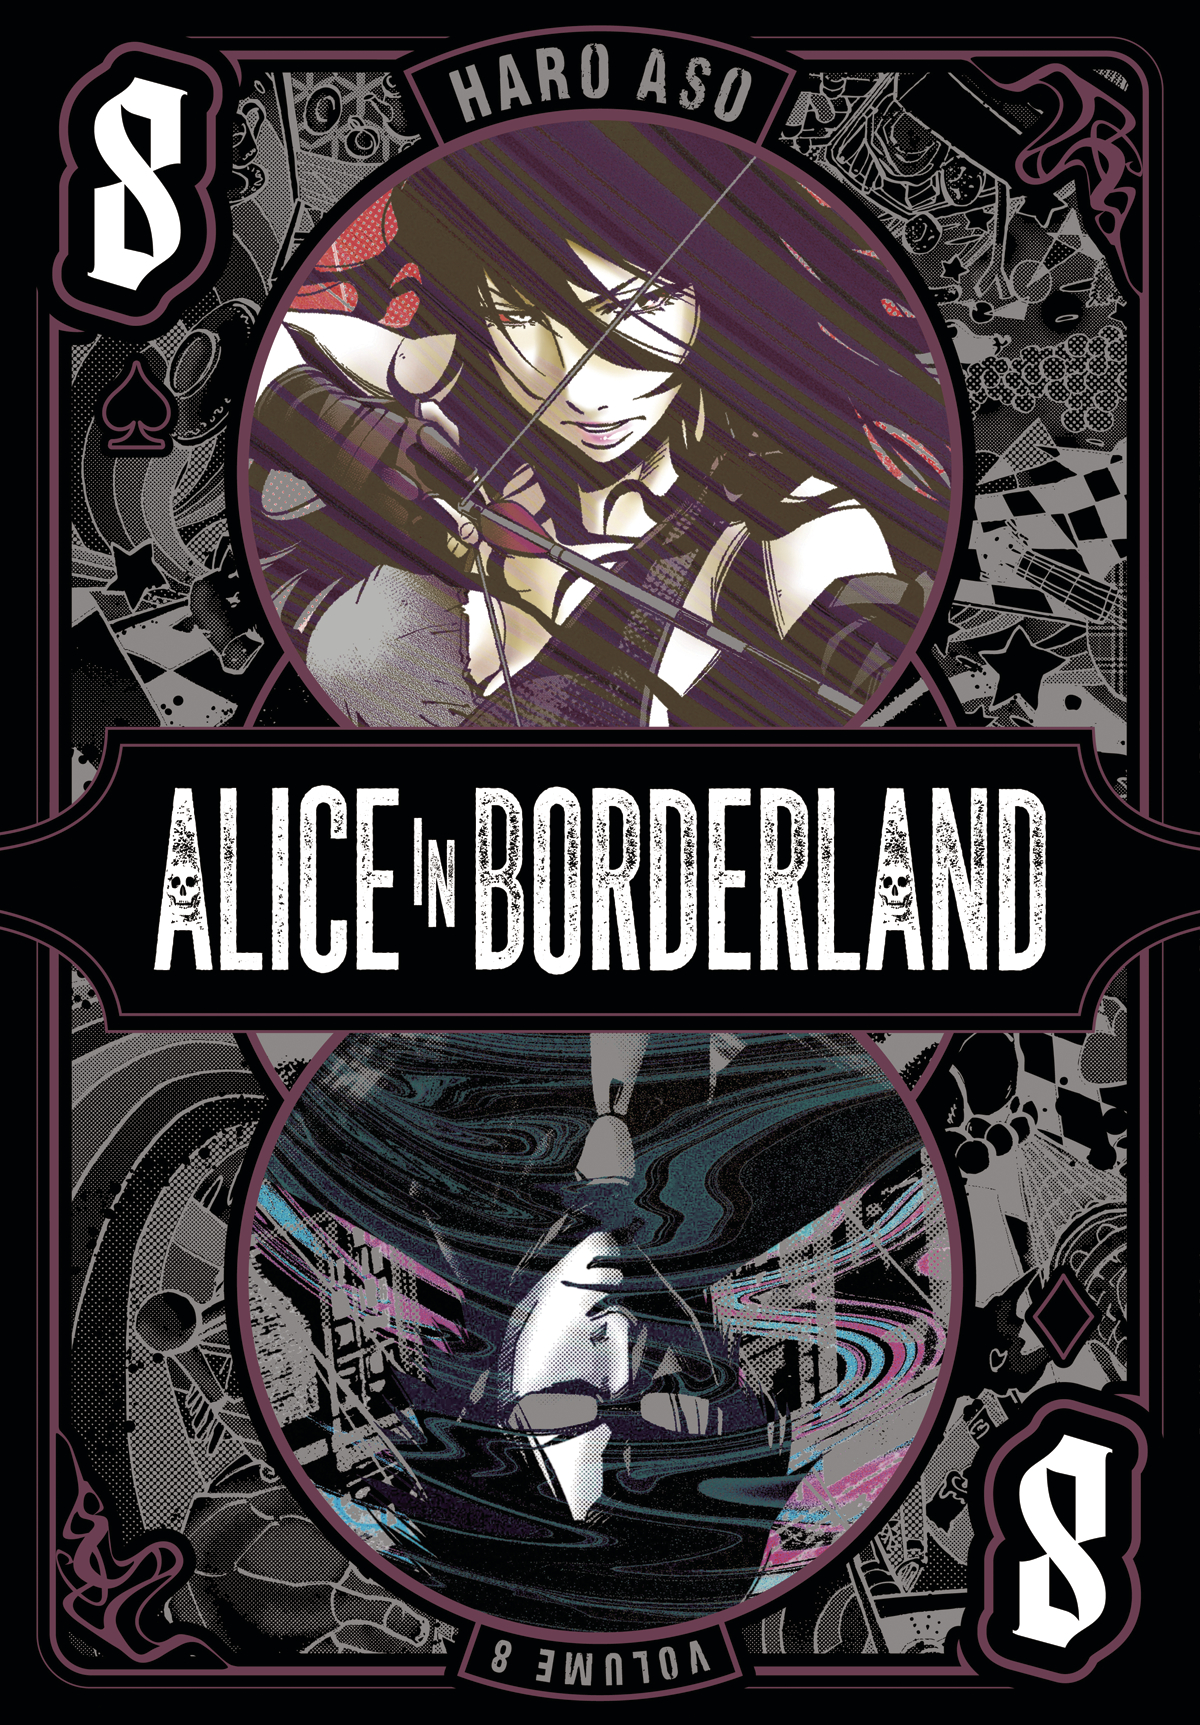 Alice In Borderland Manga Volume 8 (Mature)